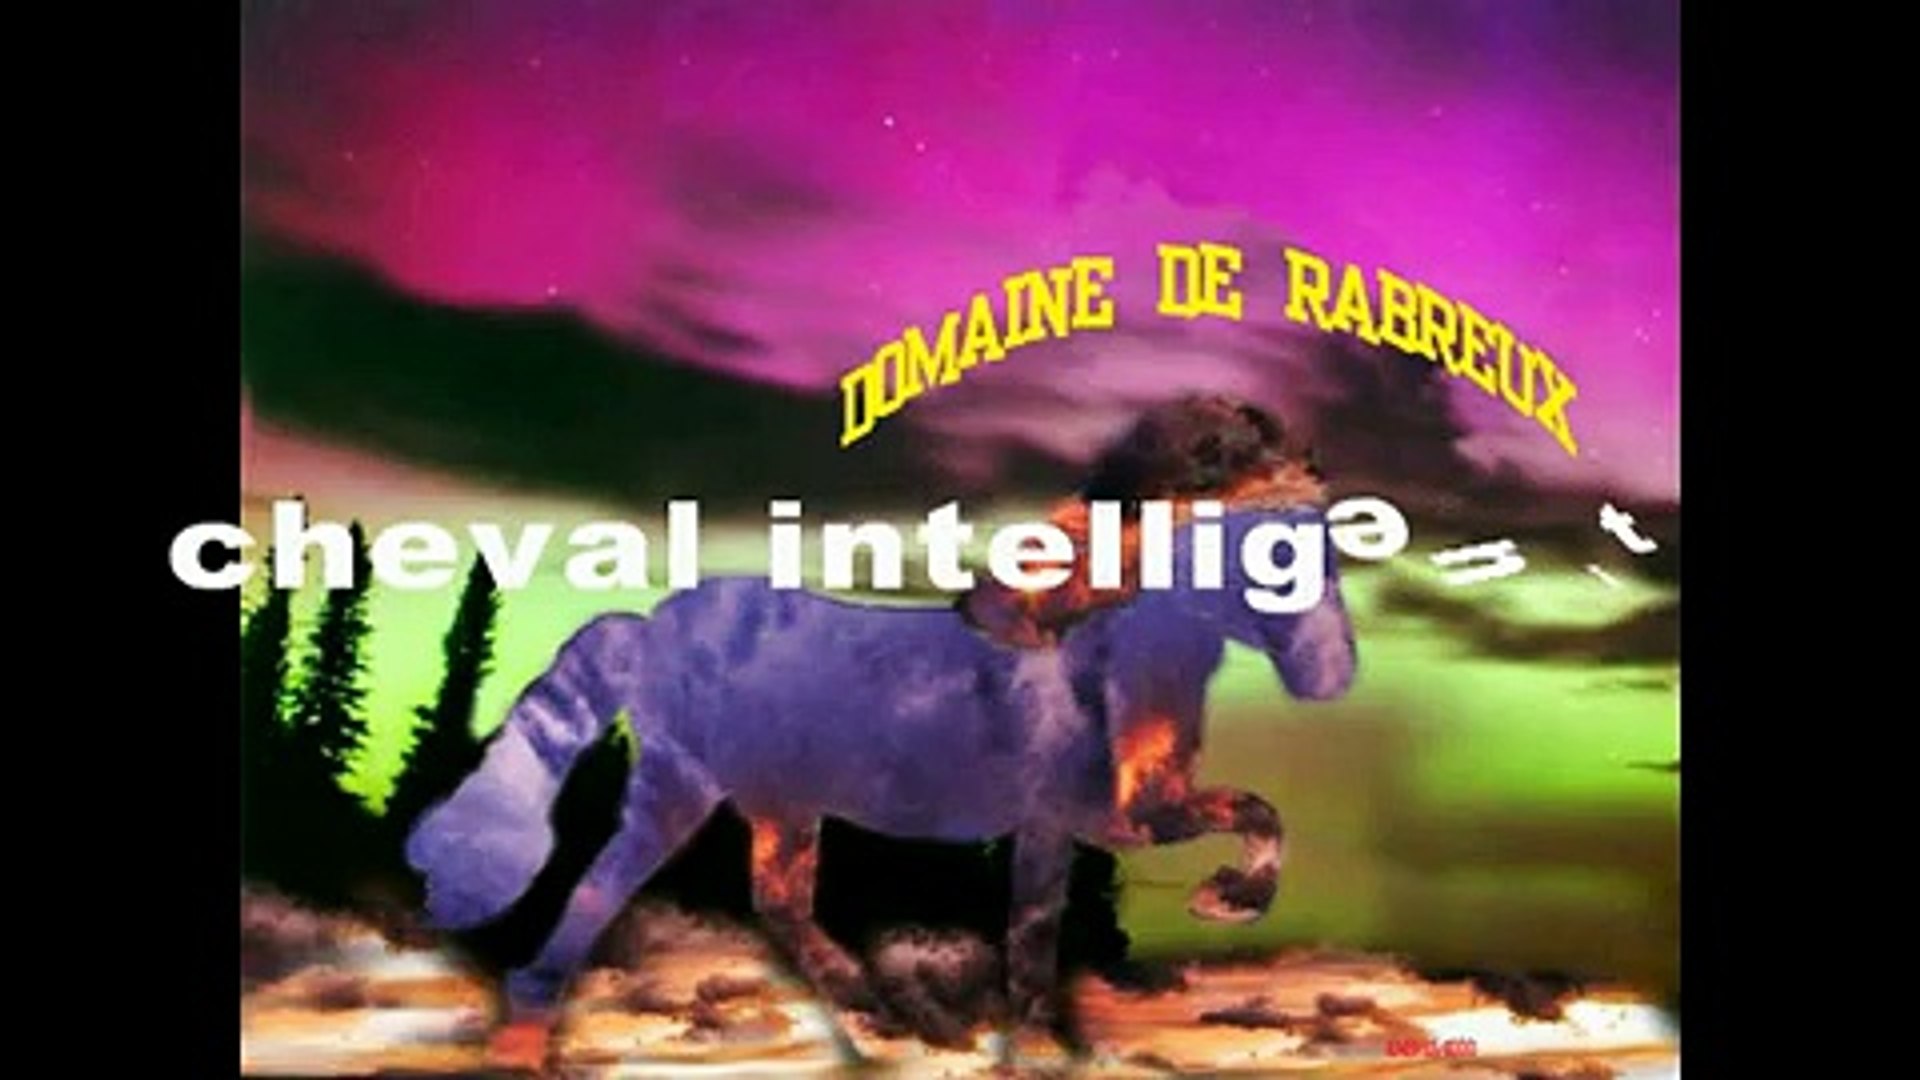 CHEVAL ISLANDAIS -INTELLIGENT-DOMAINE DE RABREUX-40--Intelligent horse skeifa